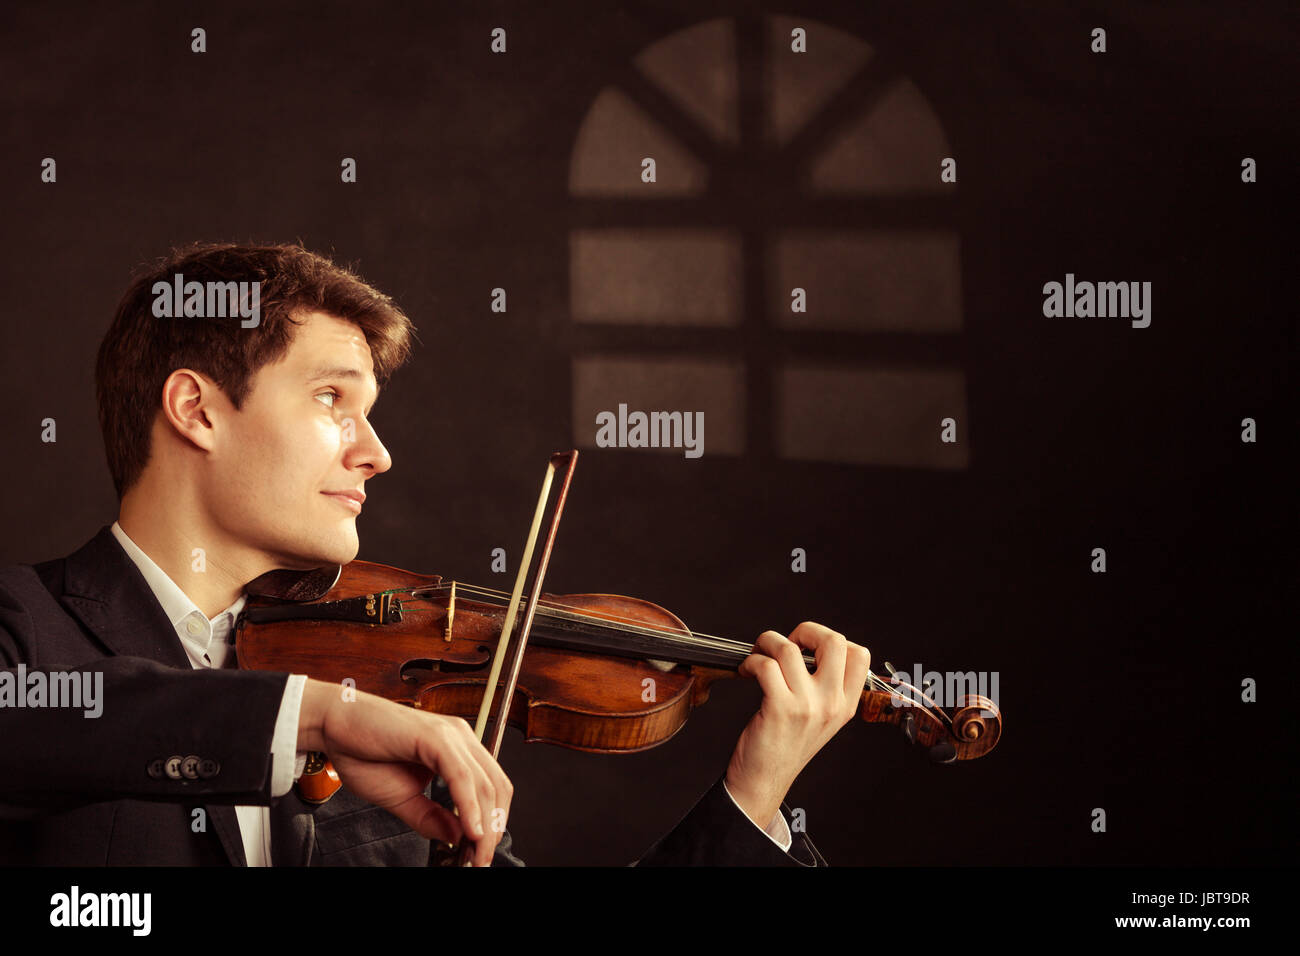 Young Man Playing Violin Night Immagini e Fotos Stock - Alamy